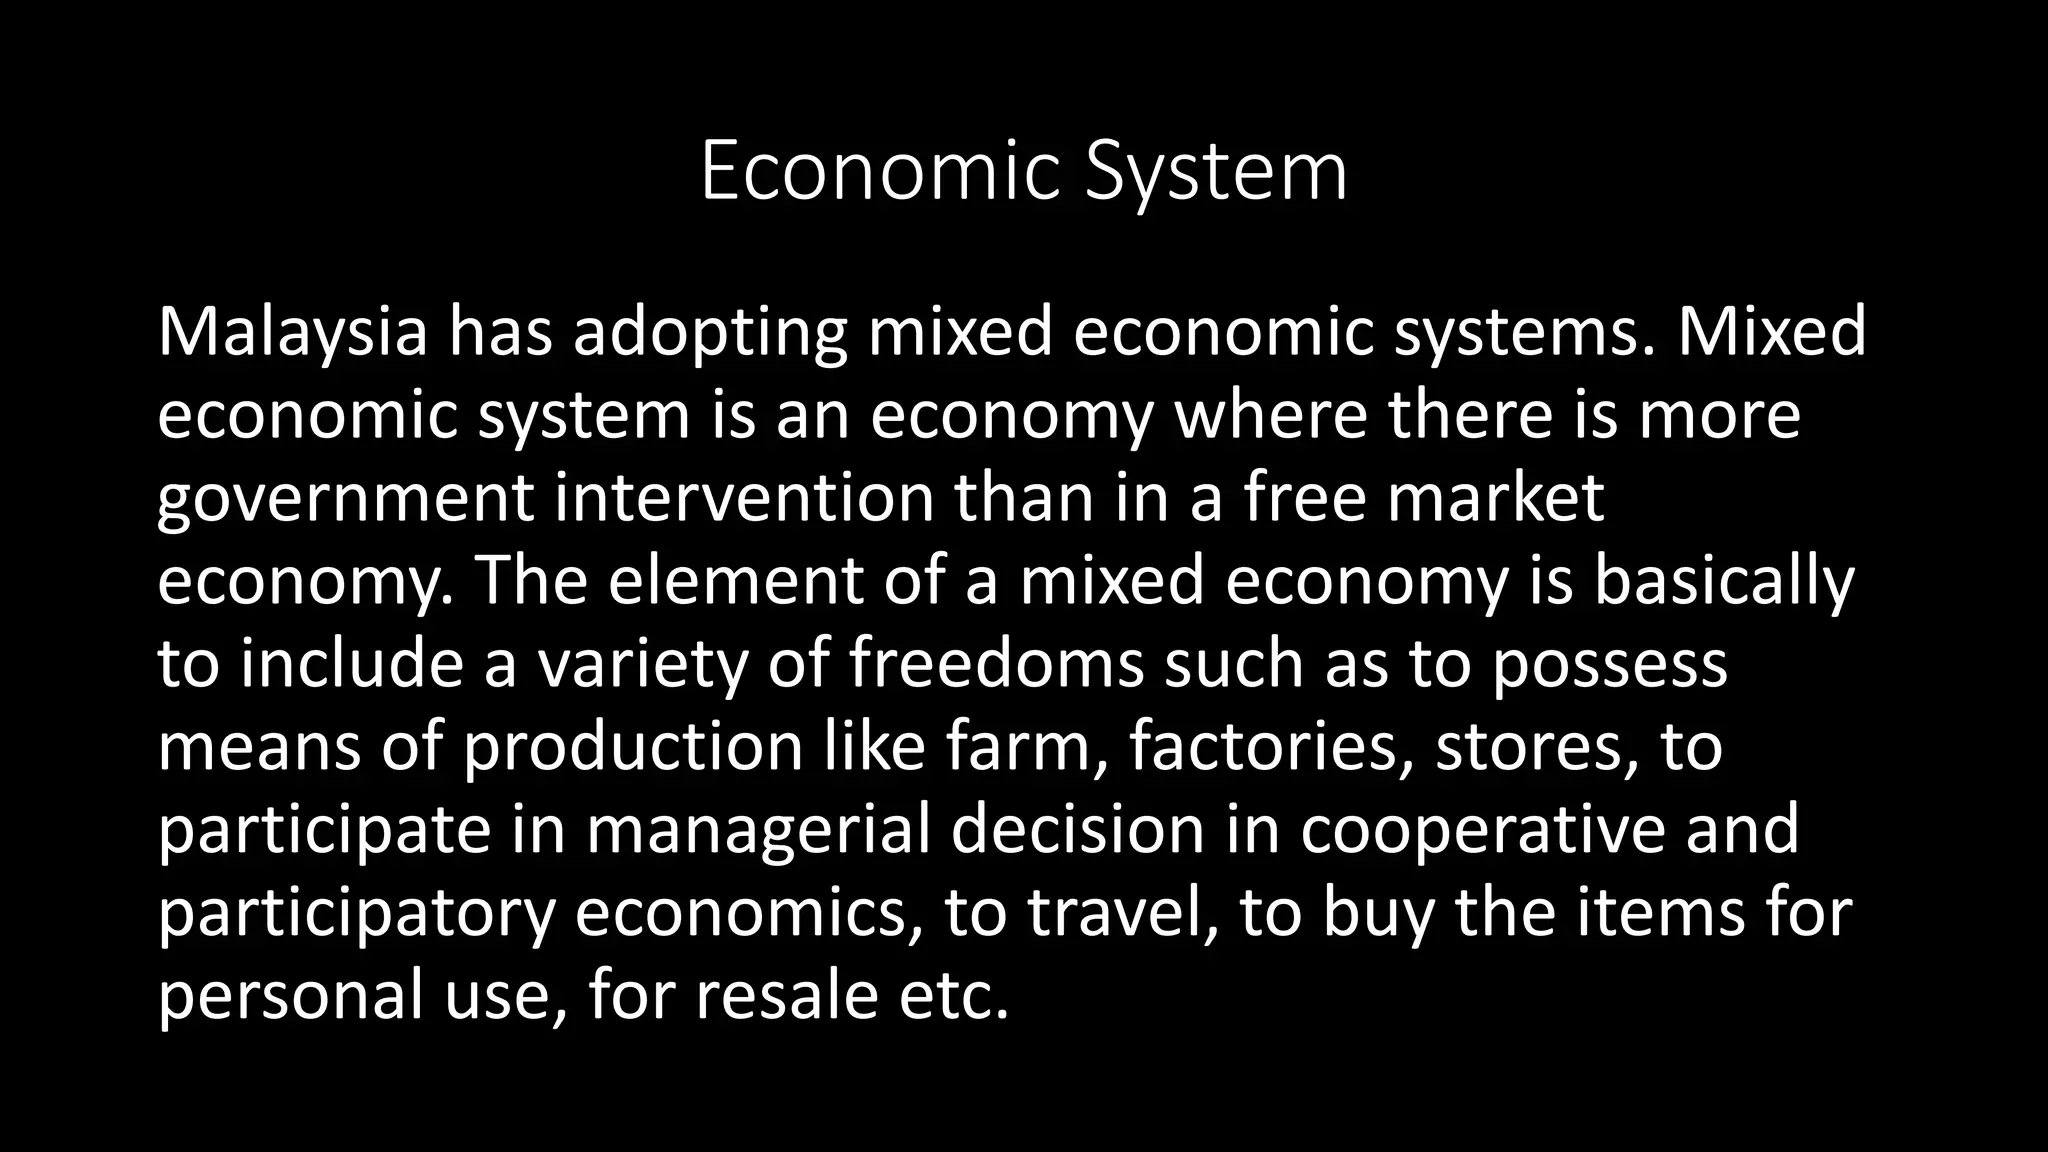 malaysia economic system